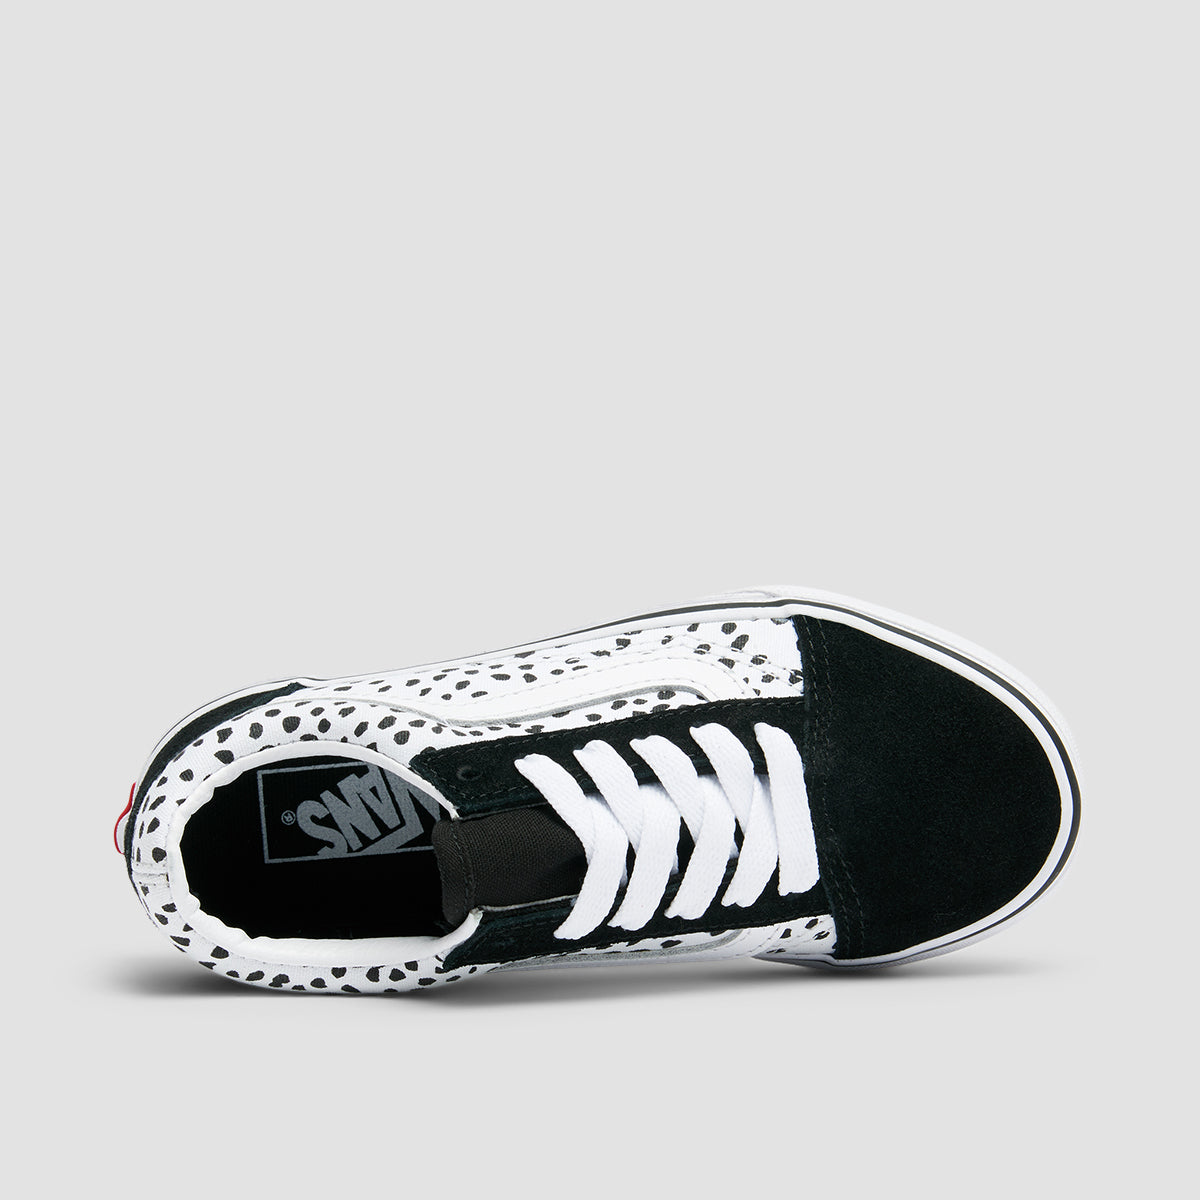 Vans Old Skool Shoes - Dalmatian Black/True White - Kids